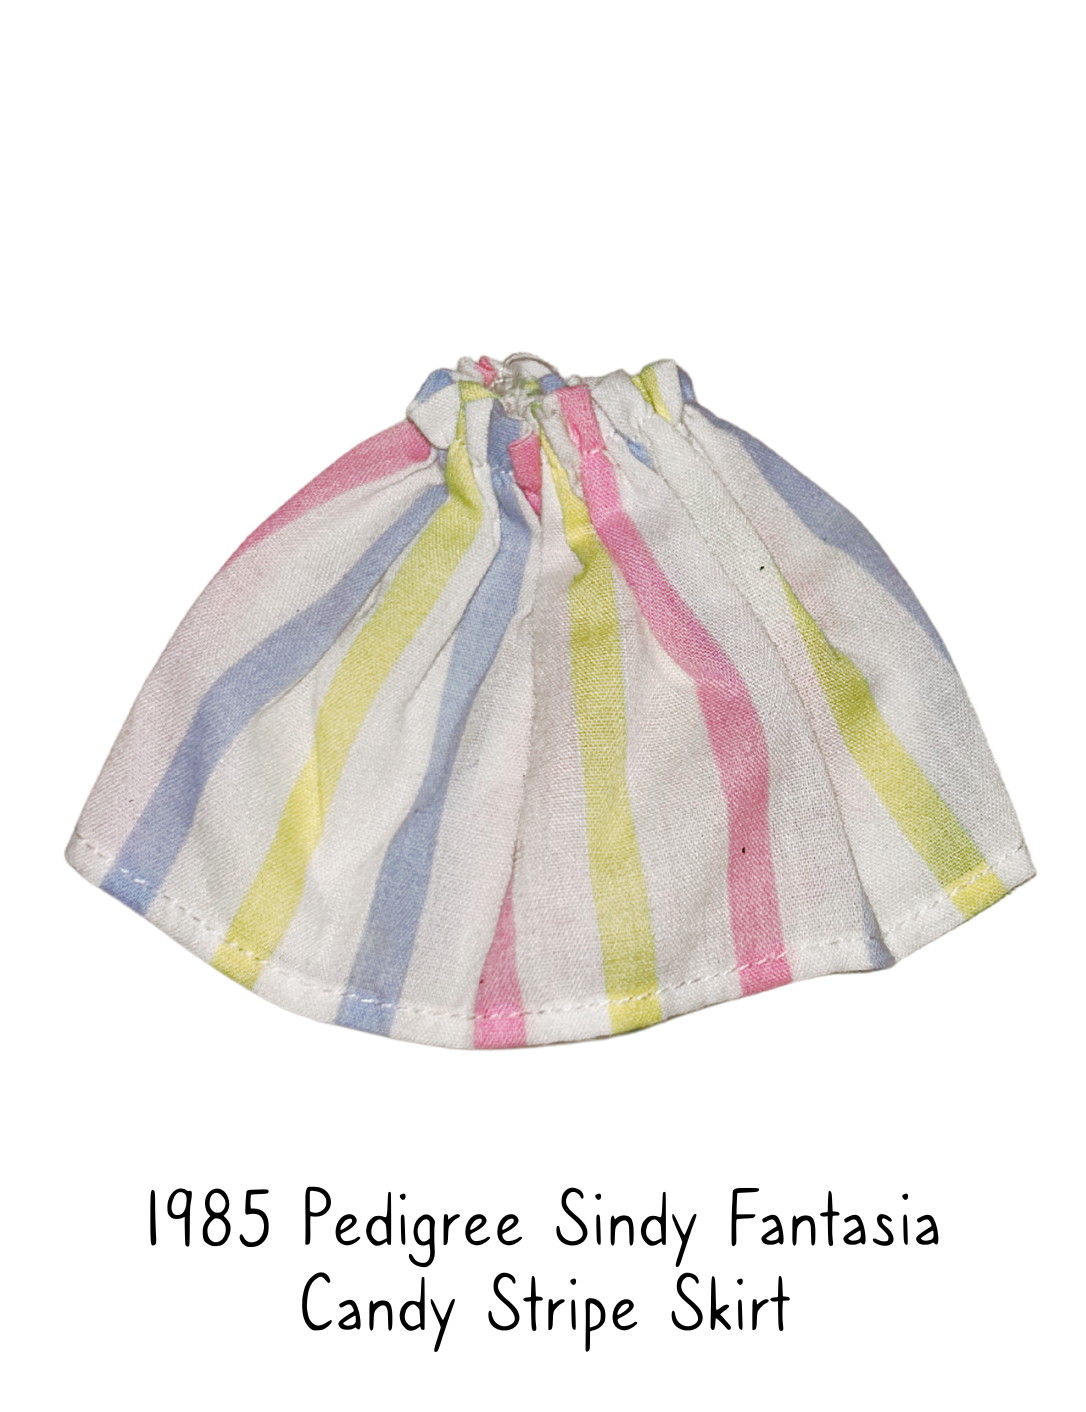 1985 Pedigree Sindy Fashion Doll Fantasia Candy Stripe Skirt